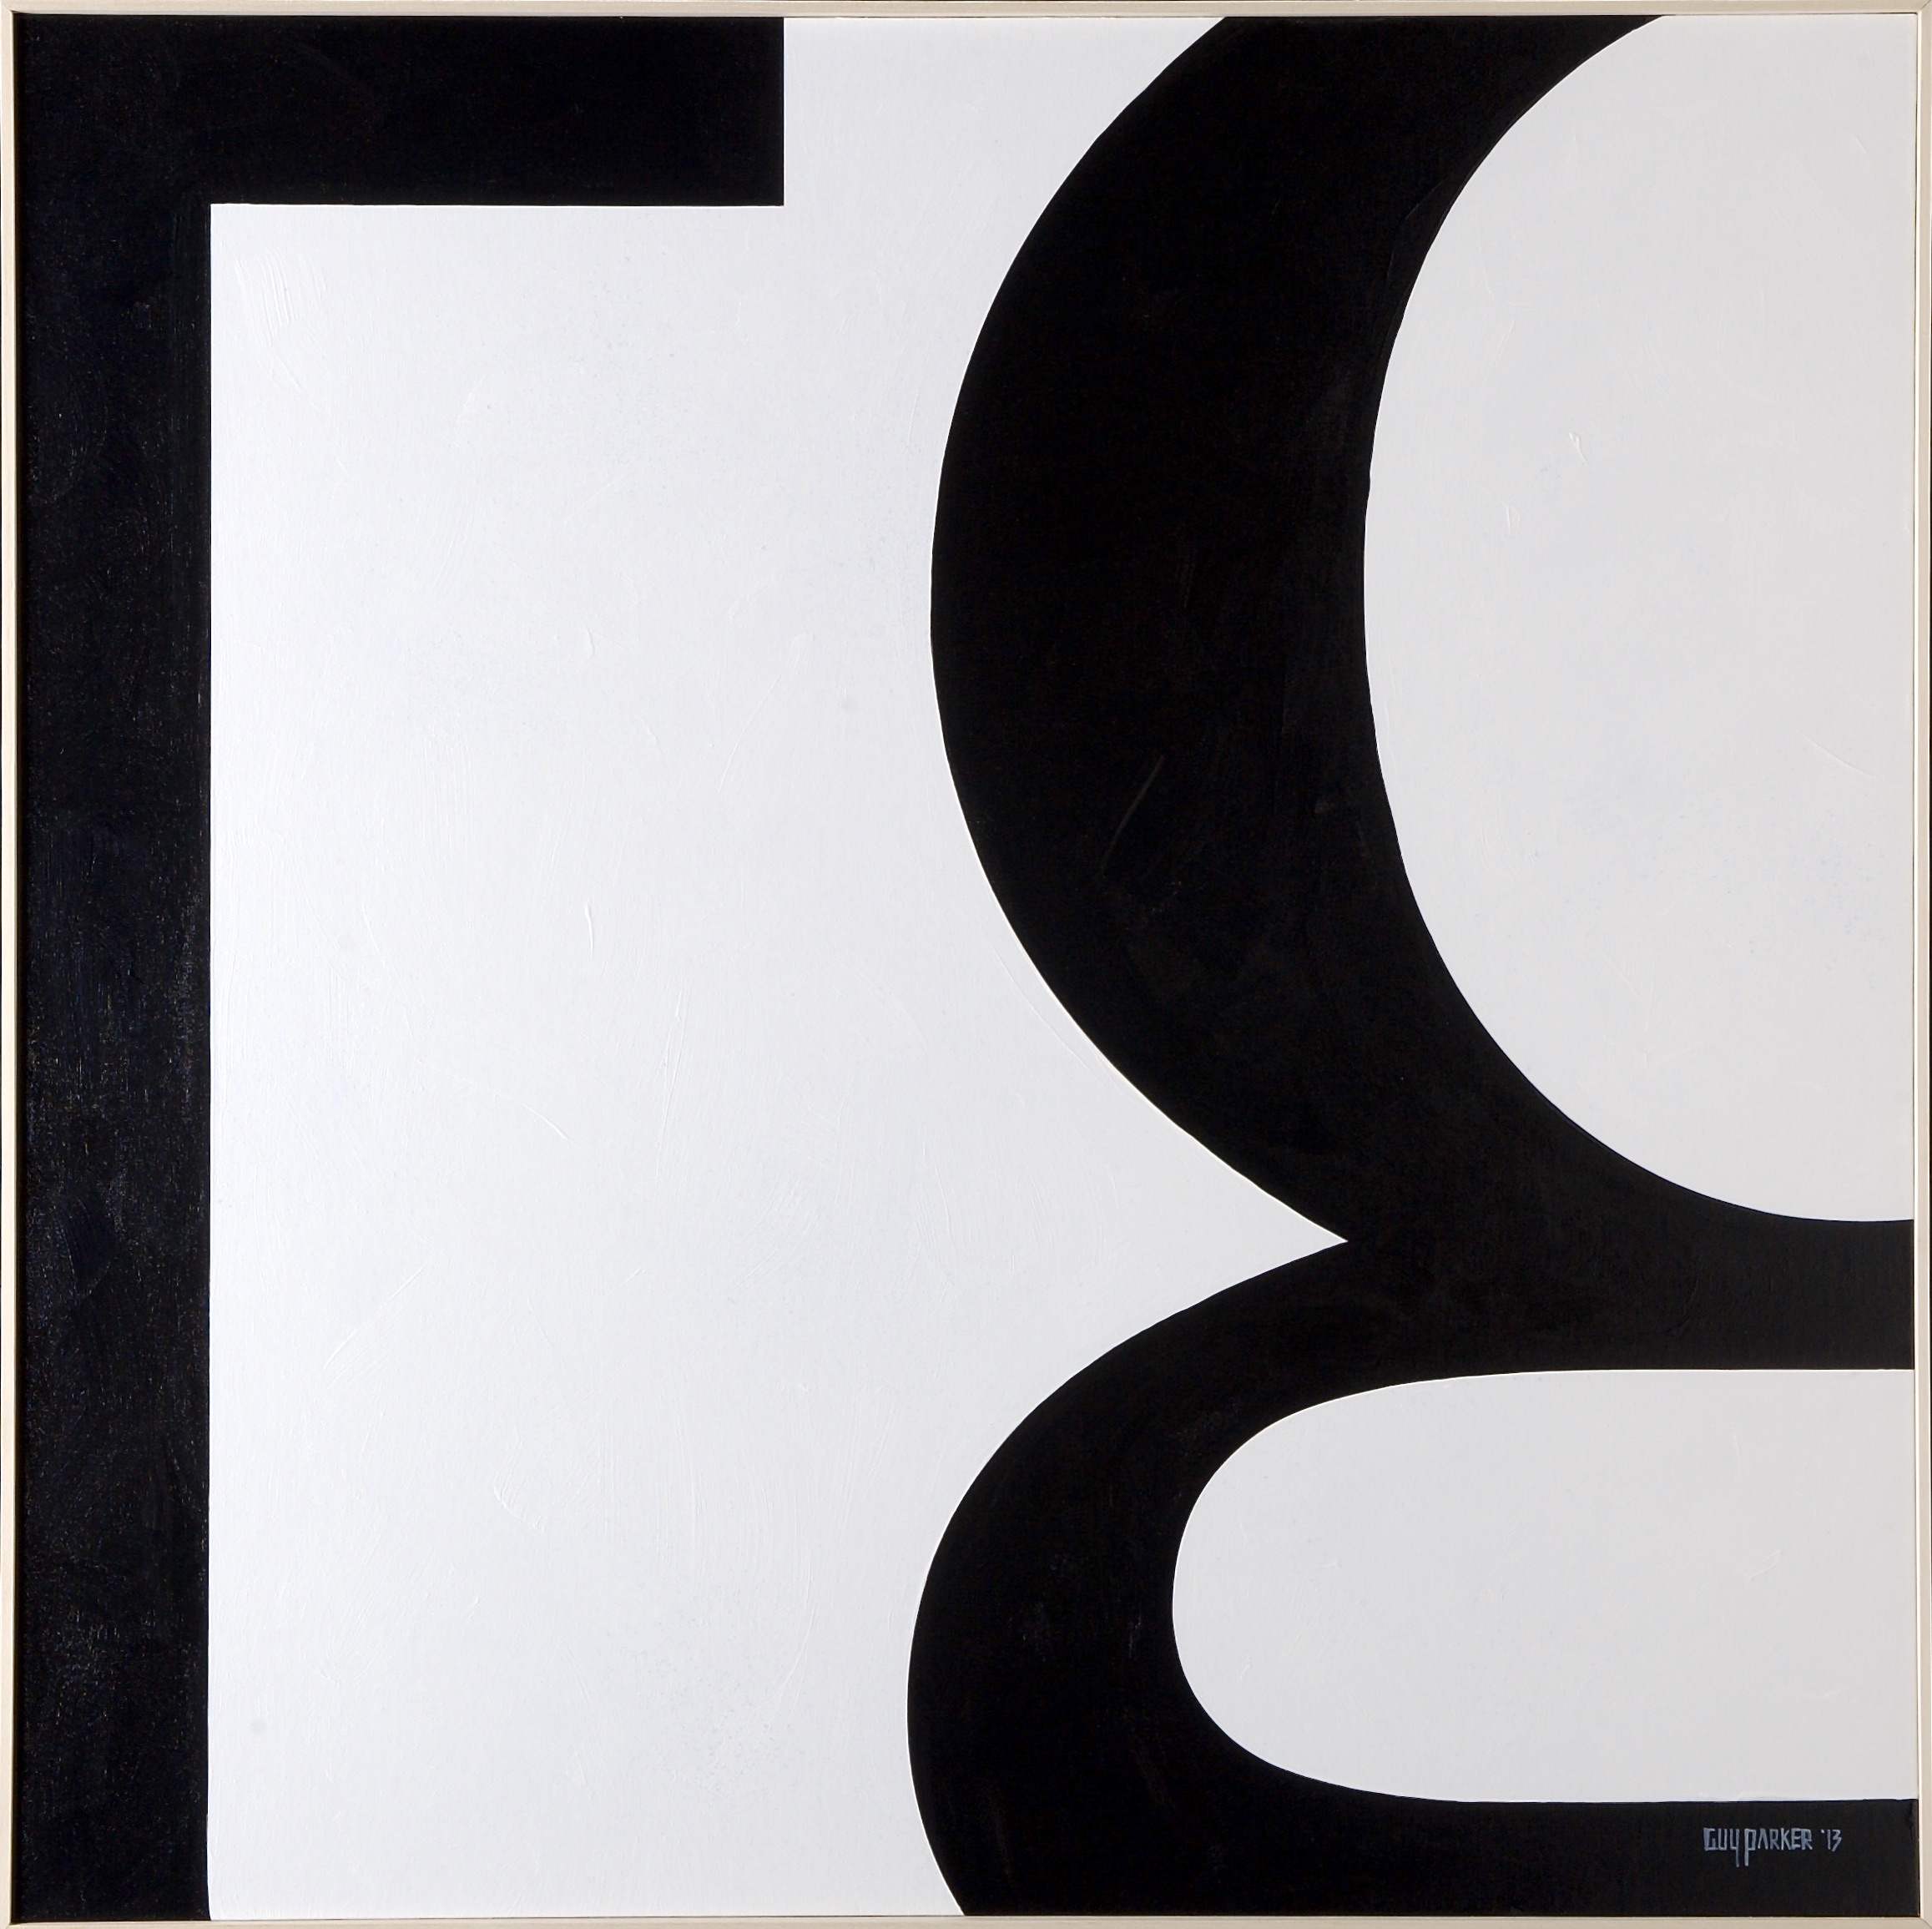 Letters "fg" acrylic on canvas board 40x40